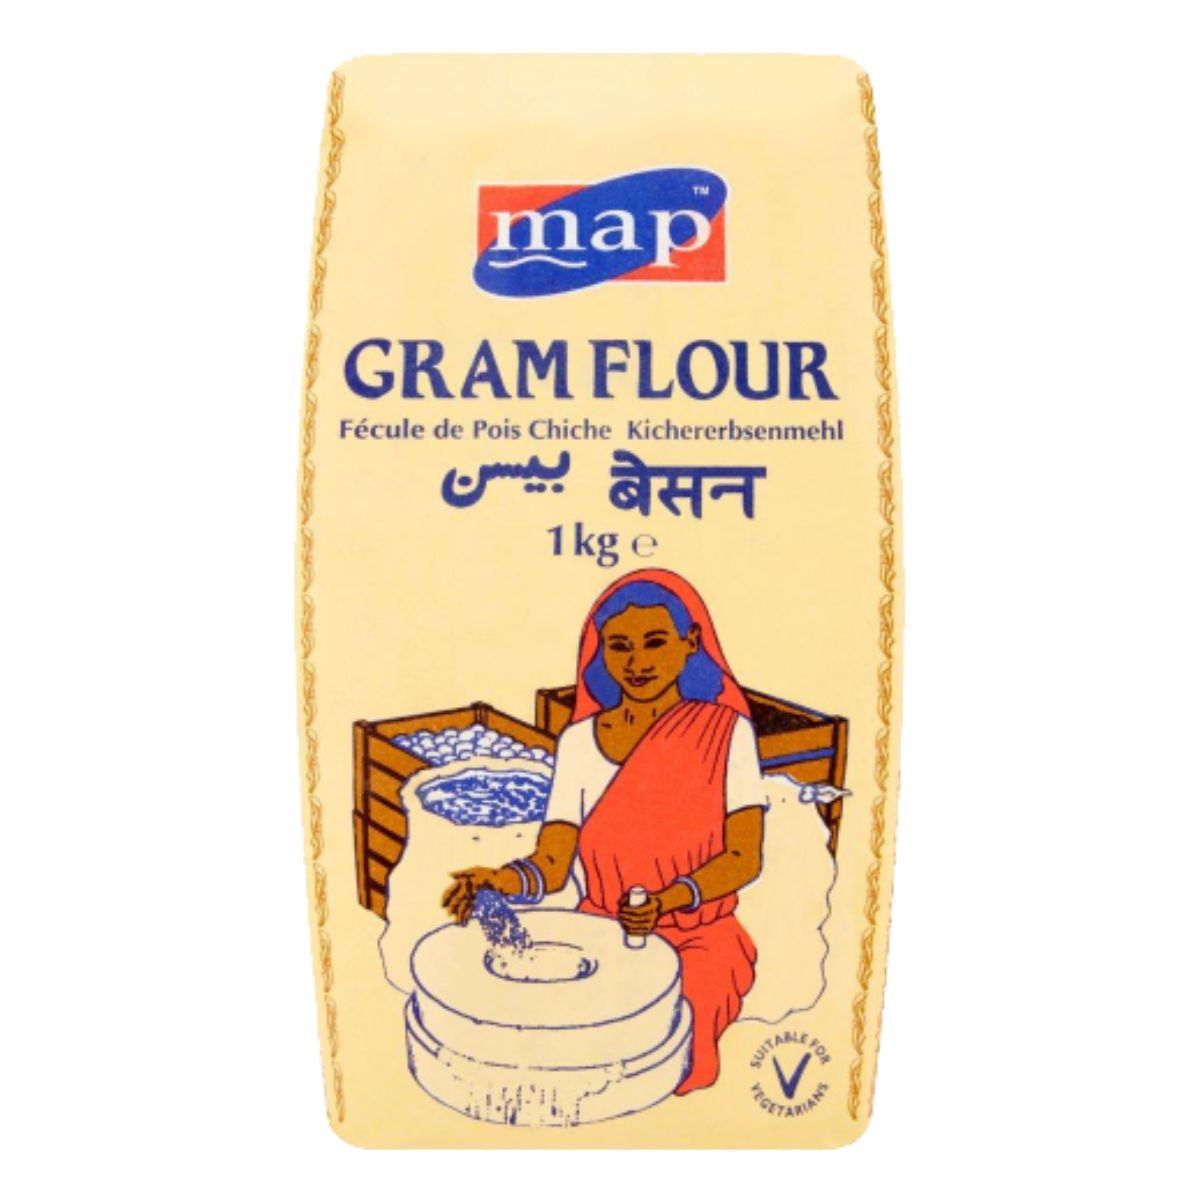 Map - Gram Flour - 1kg gram flour.